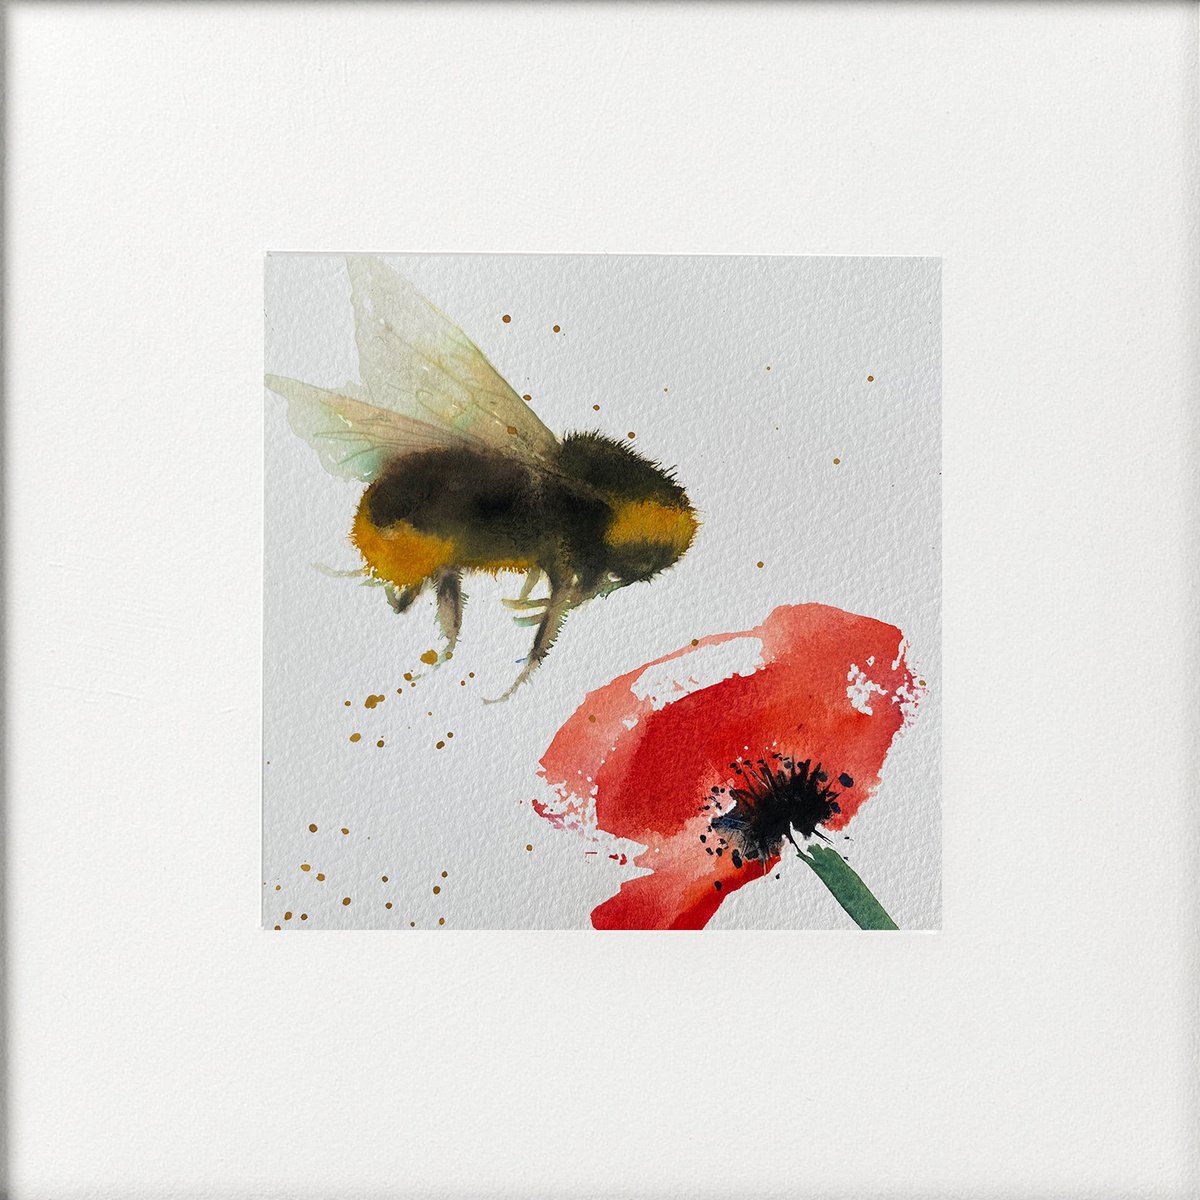 Bee visiting red poppy flower by Teresa Tanner